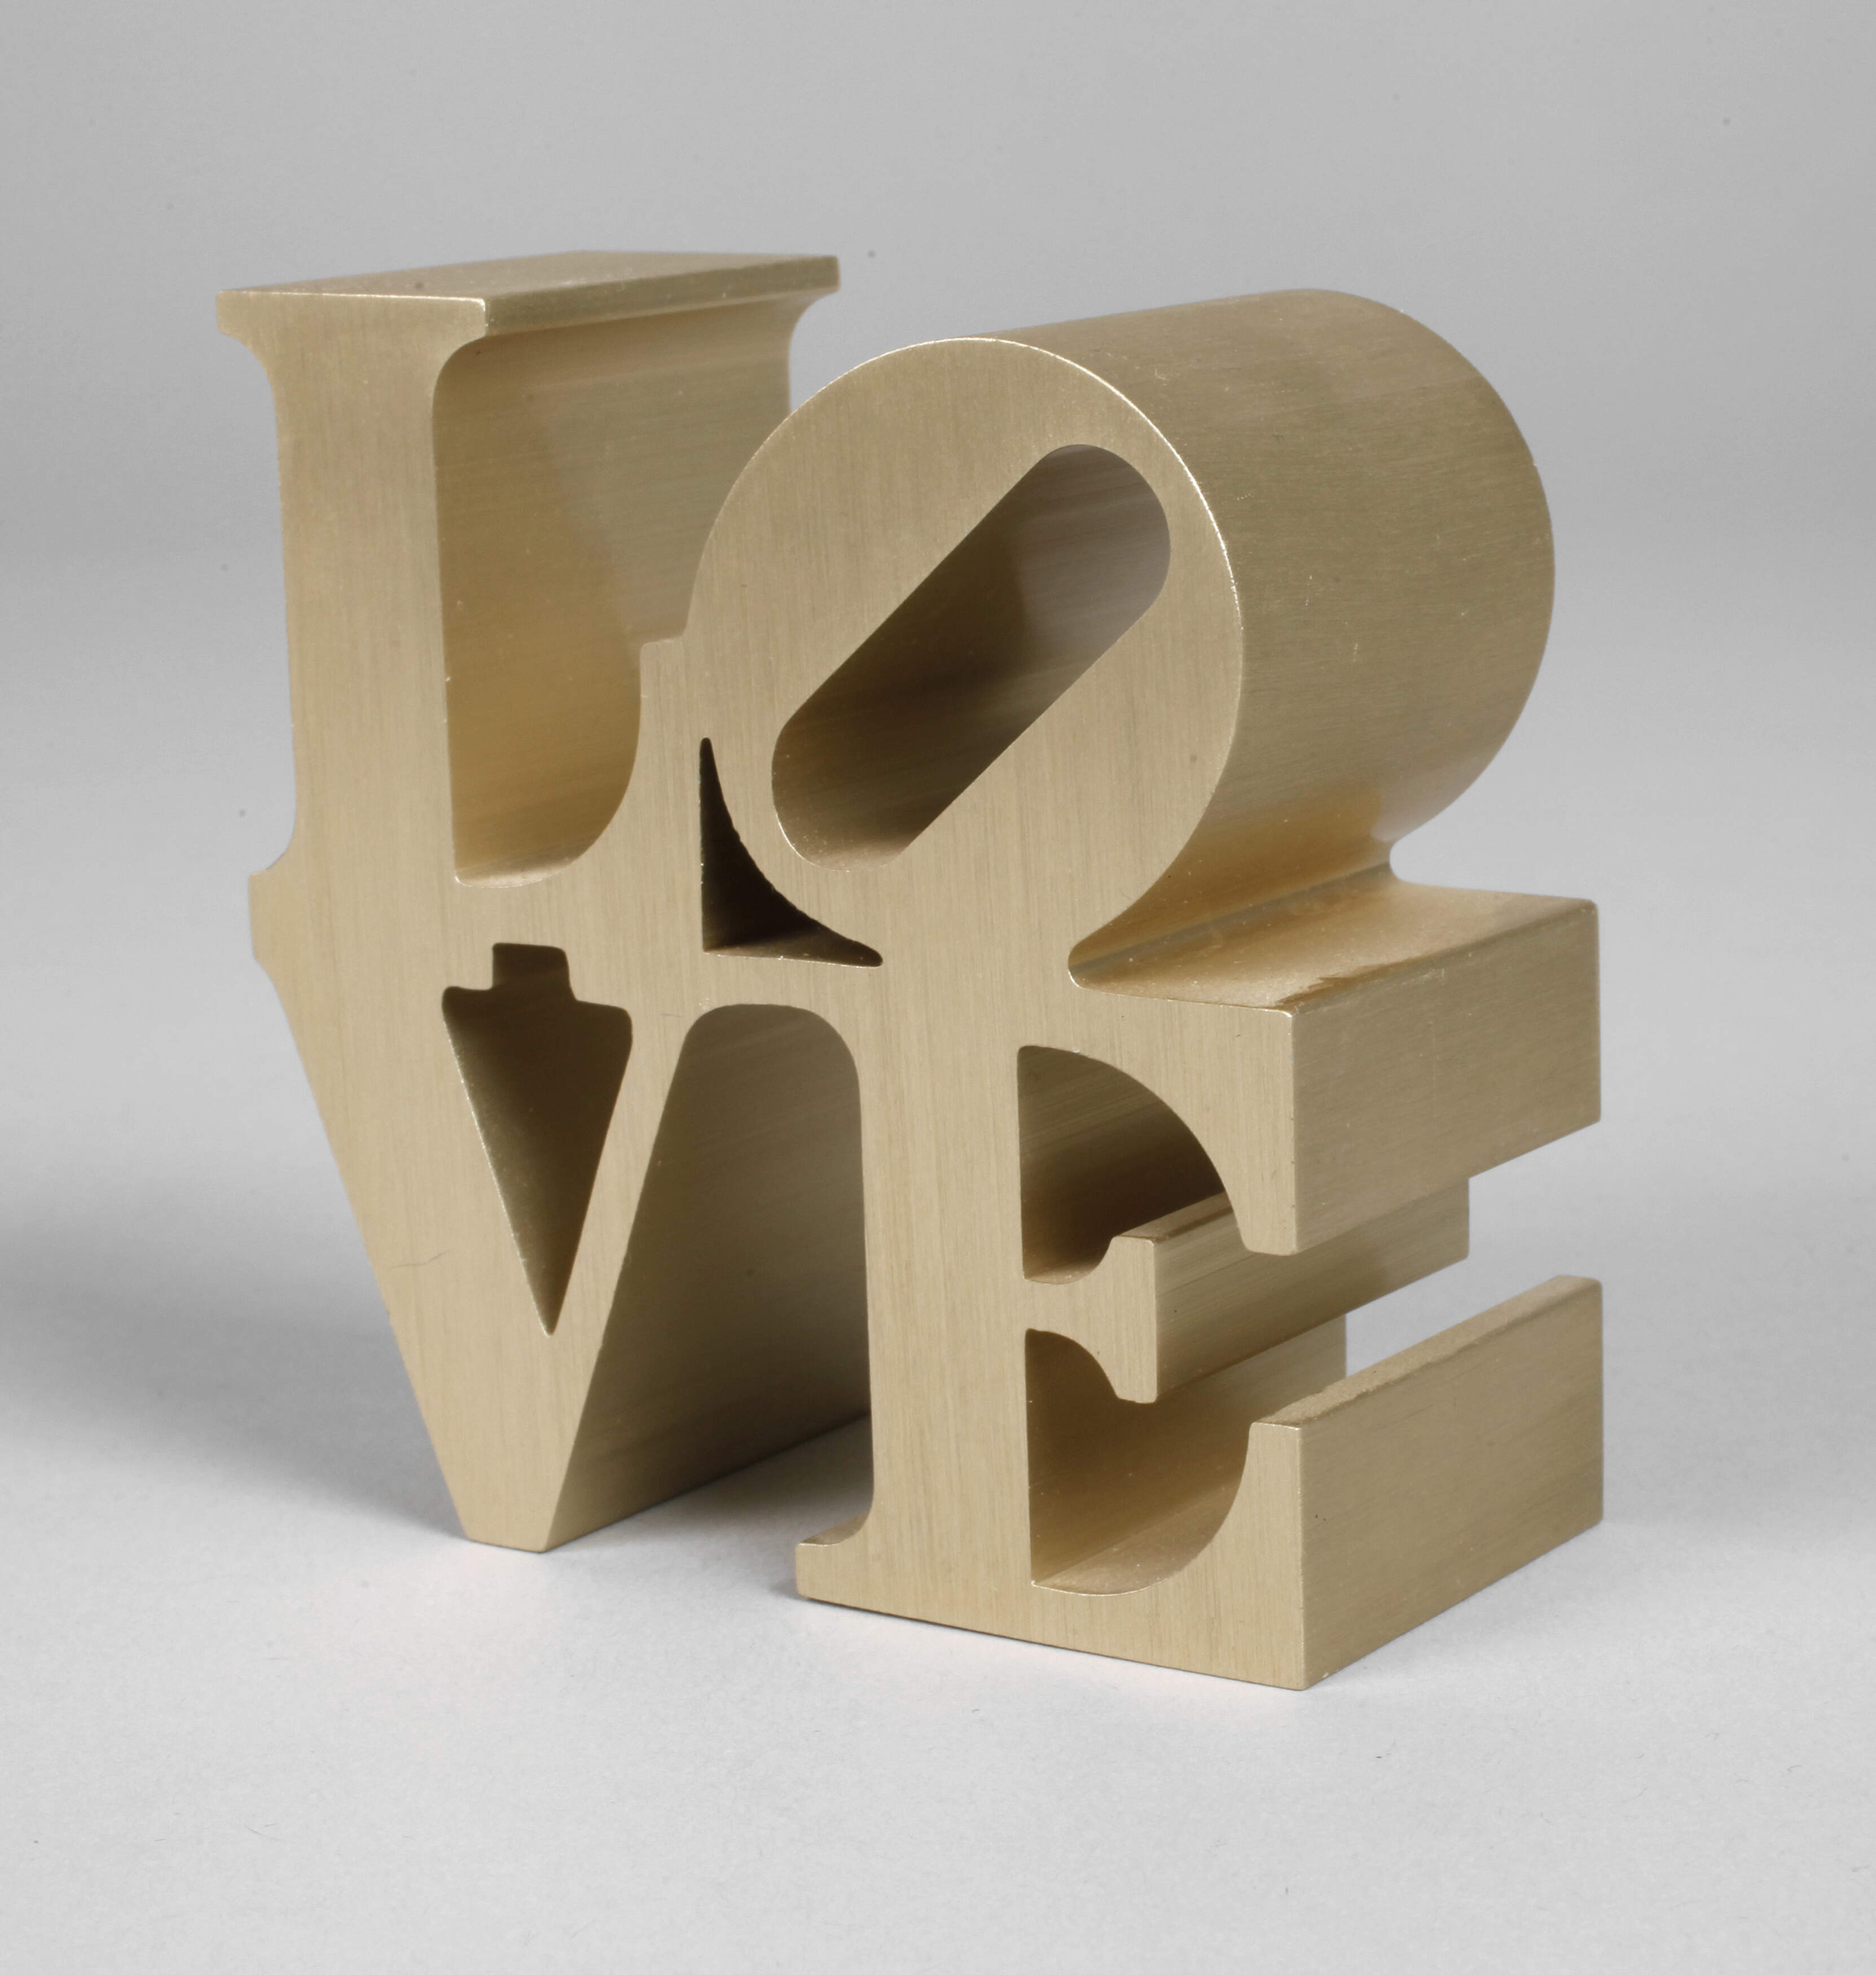 Robert Indiana, "Love"